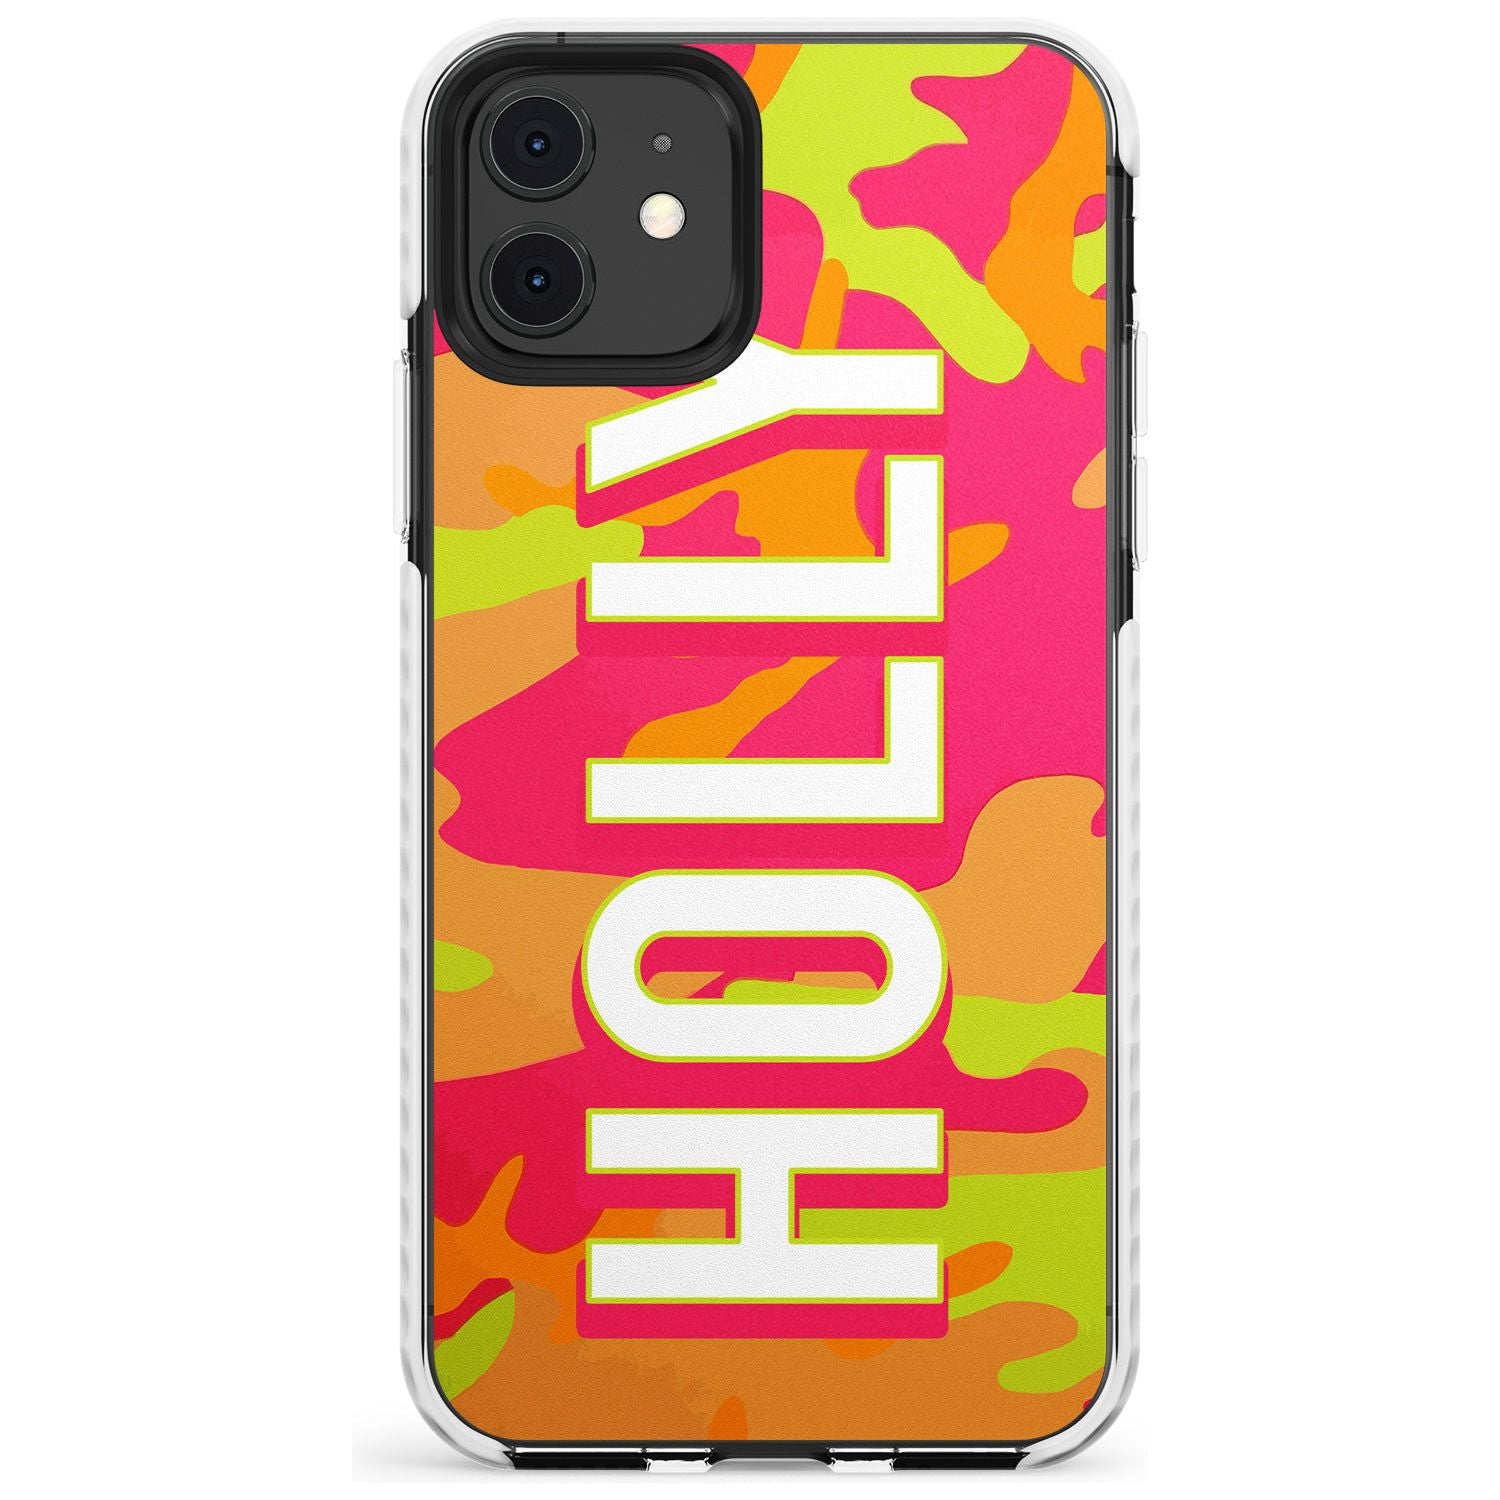 Colourful Neon Camo Slim TPU Phone Case for iPhone 11